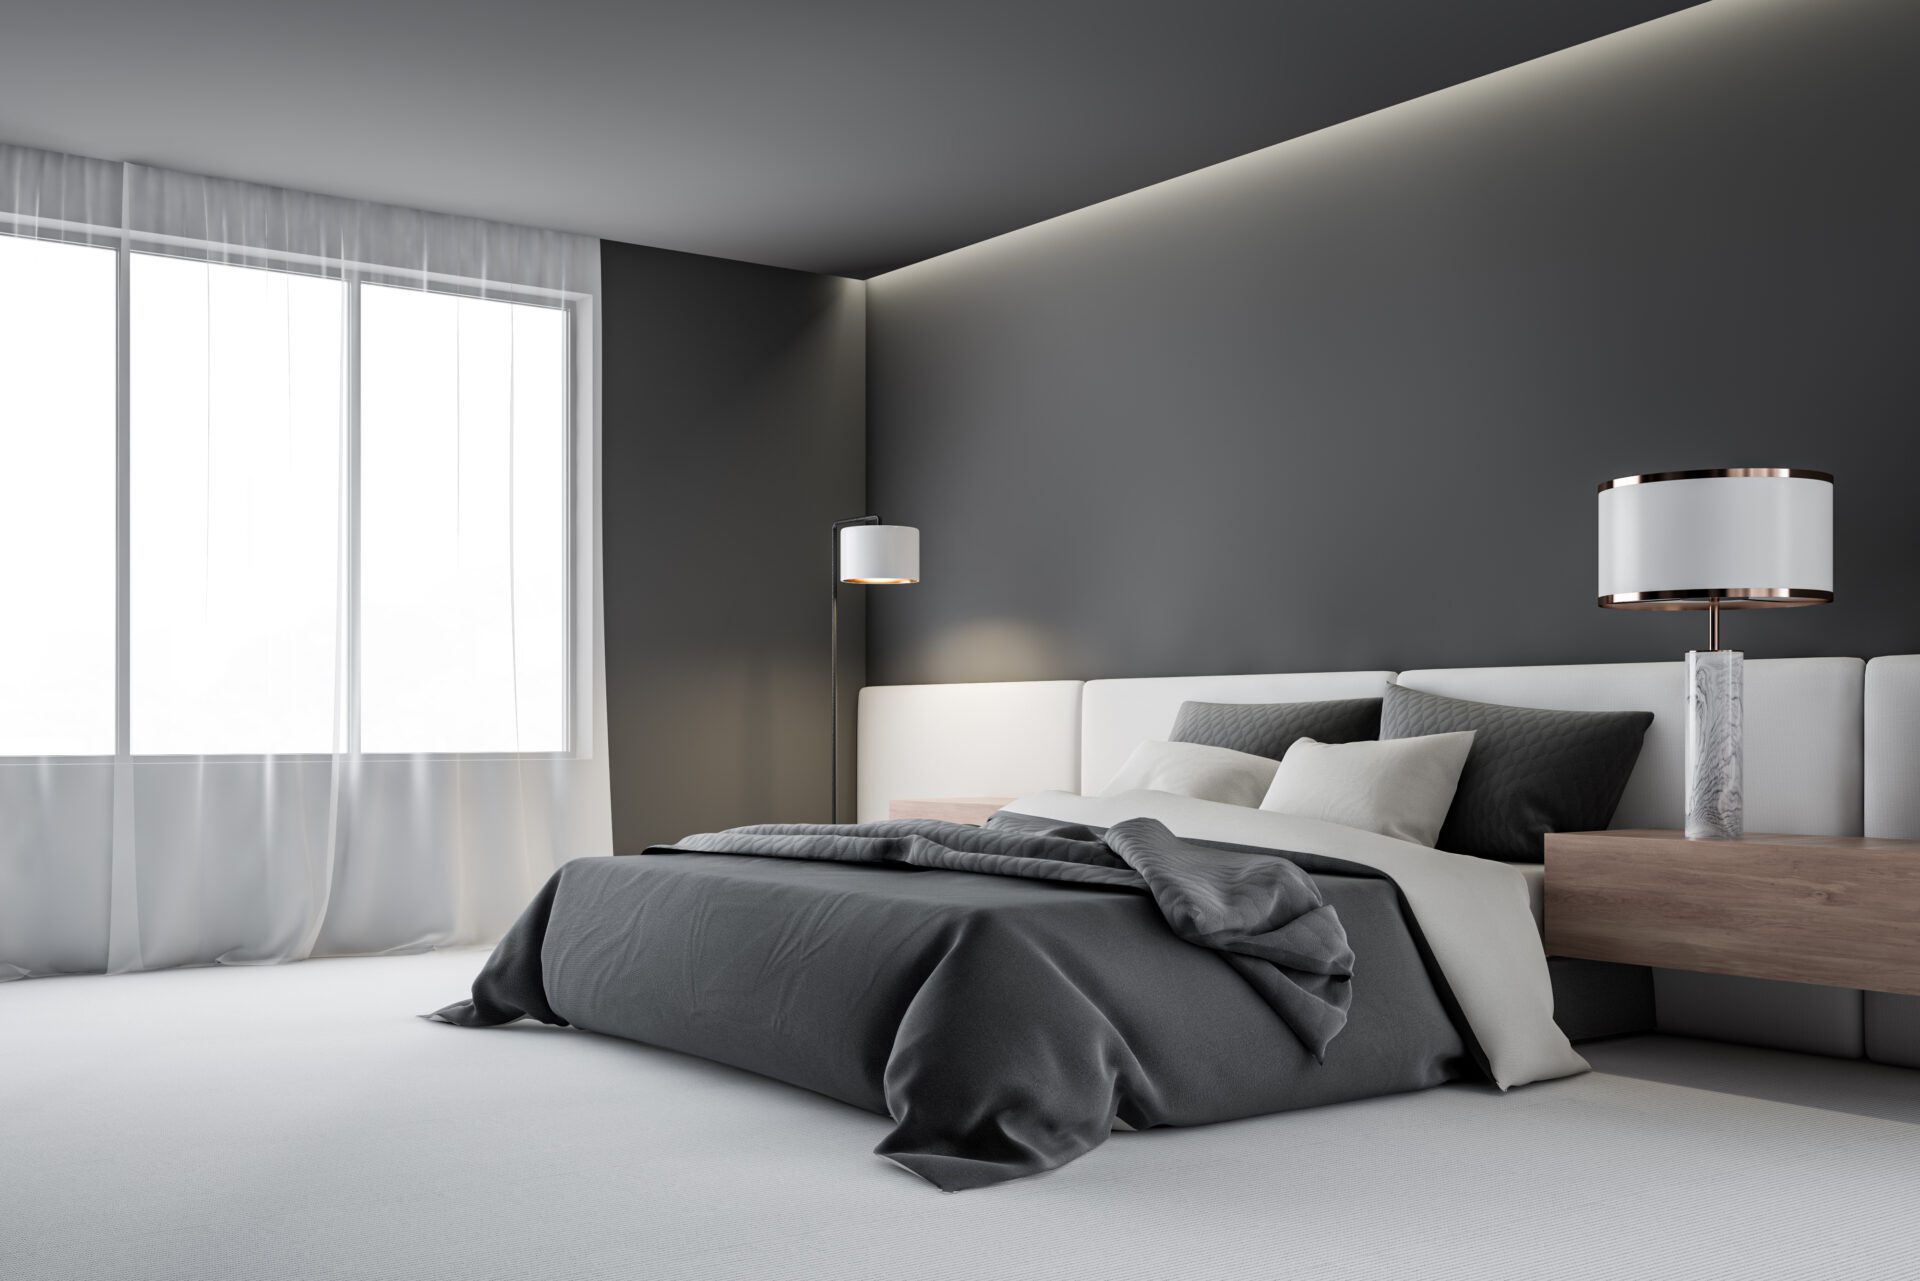 custom bed - Gray master bedroom corner with lamp